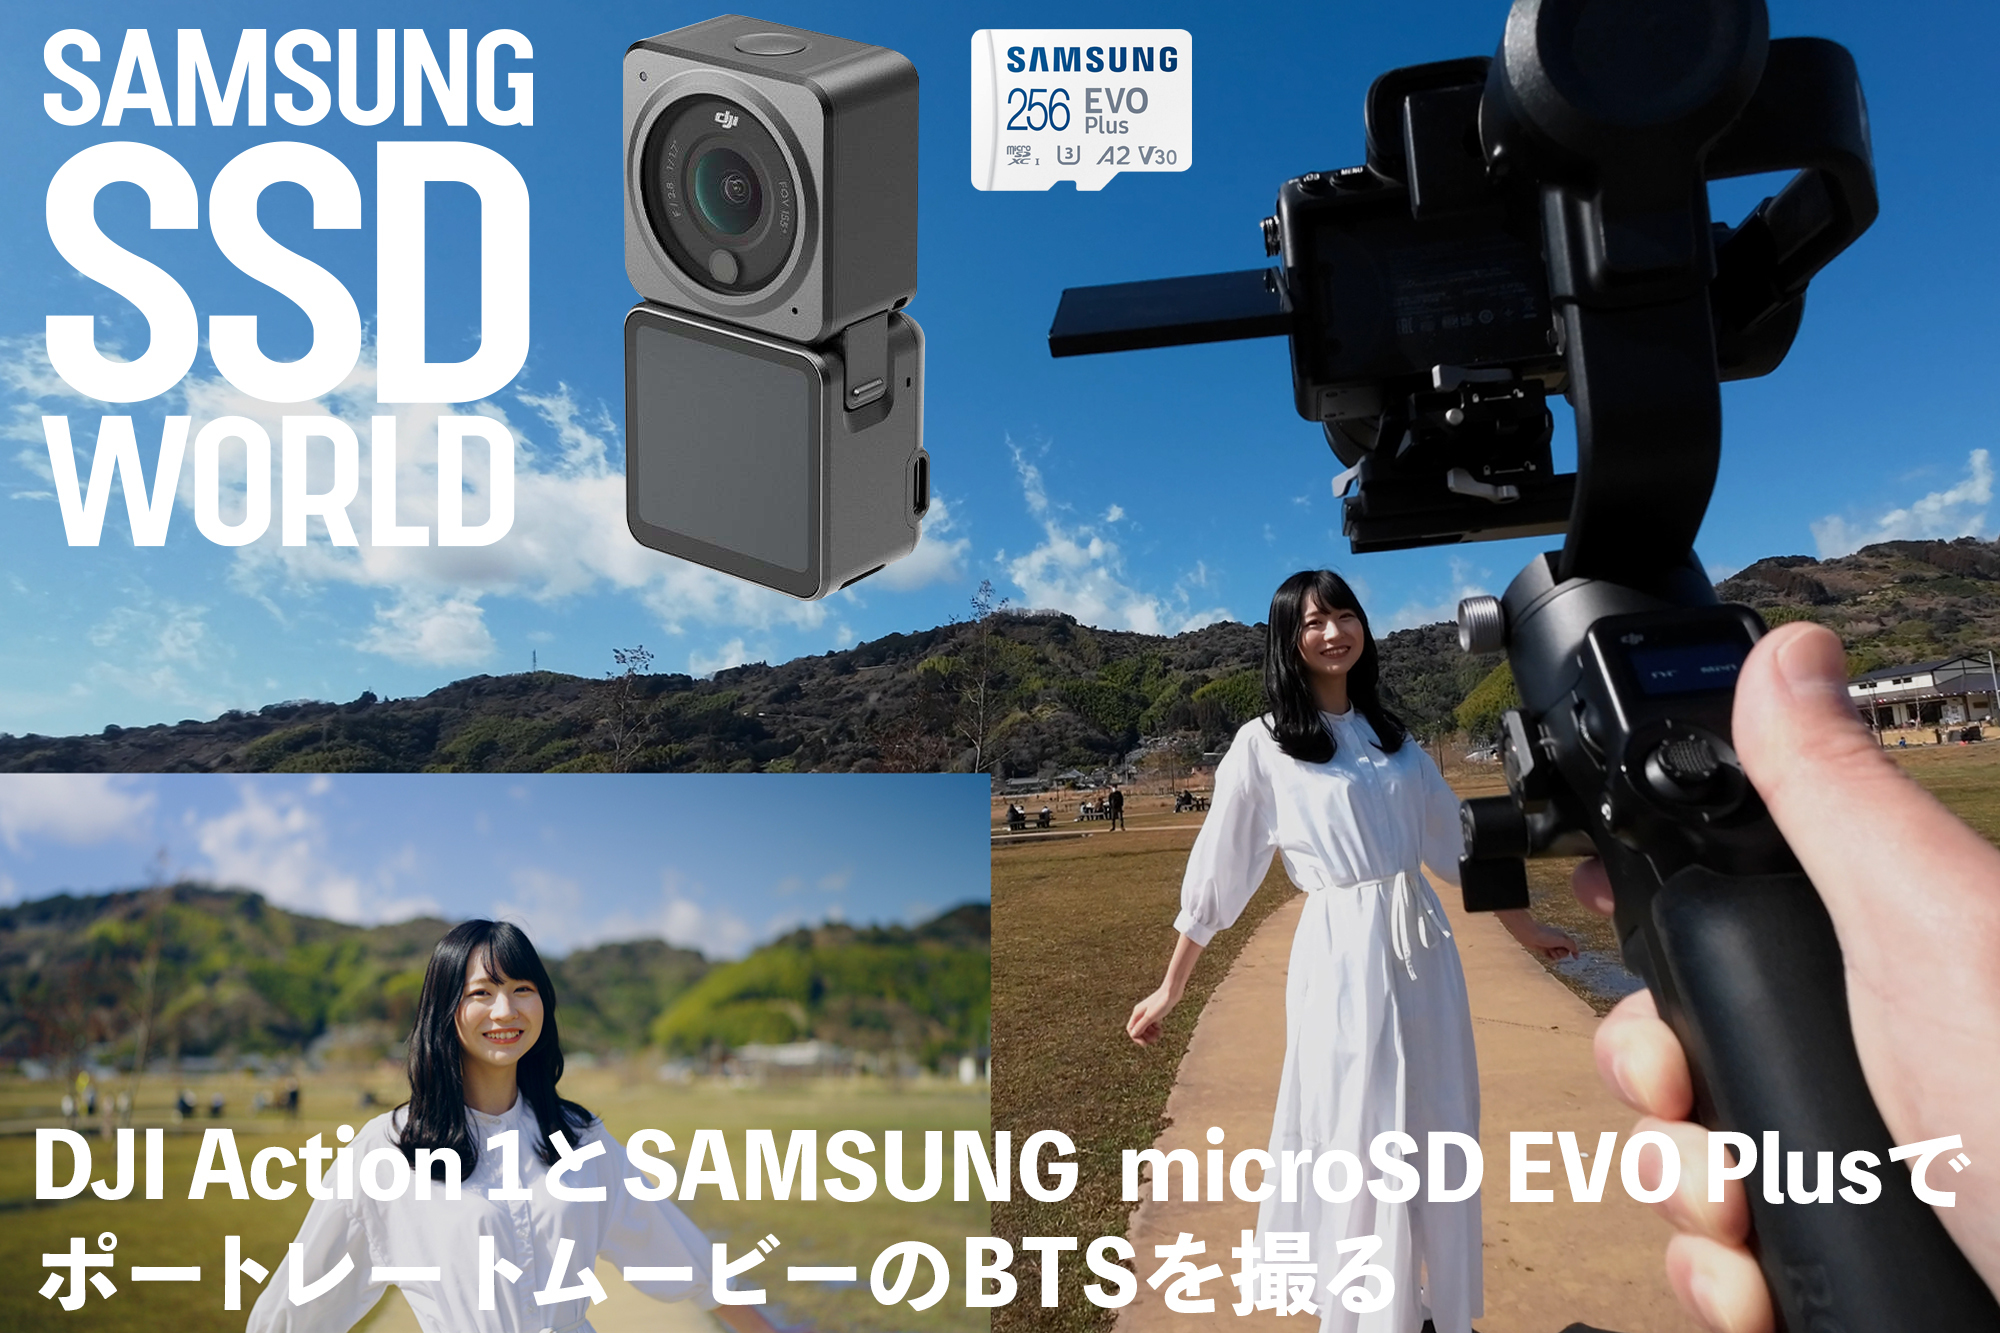 SAMSUNG SSD WORLD】DJI Action 2とSamsung microSD EVO Plusで ポート